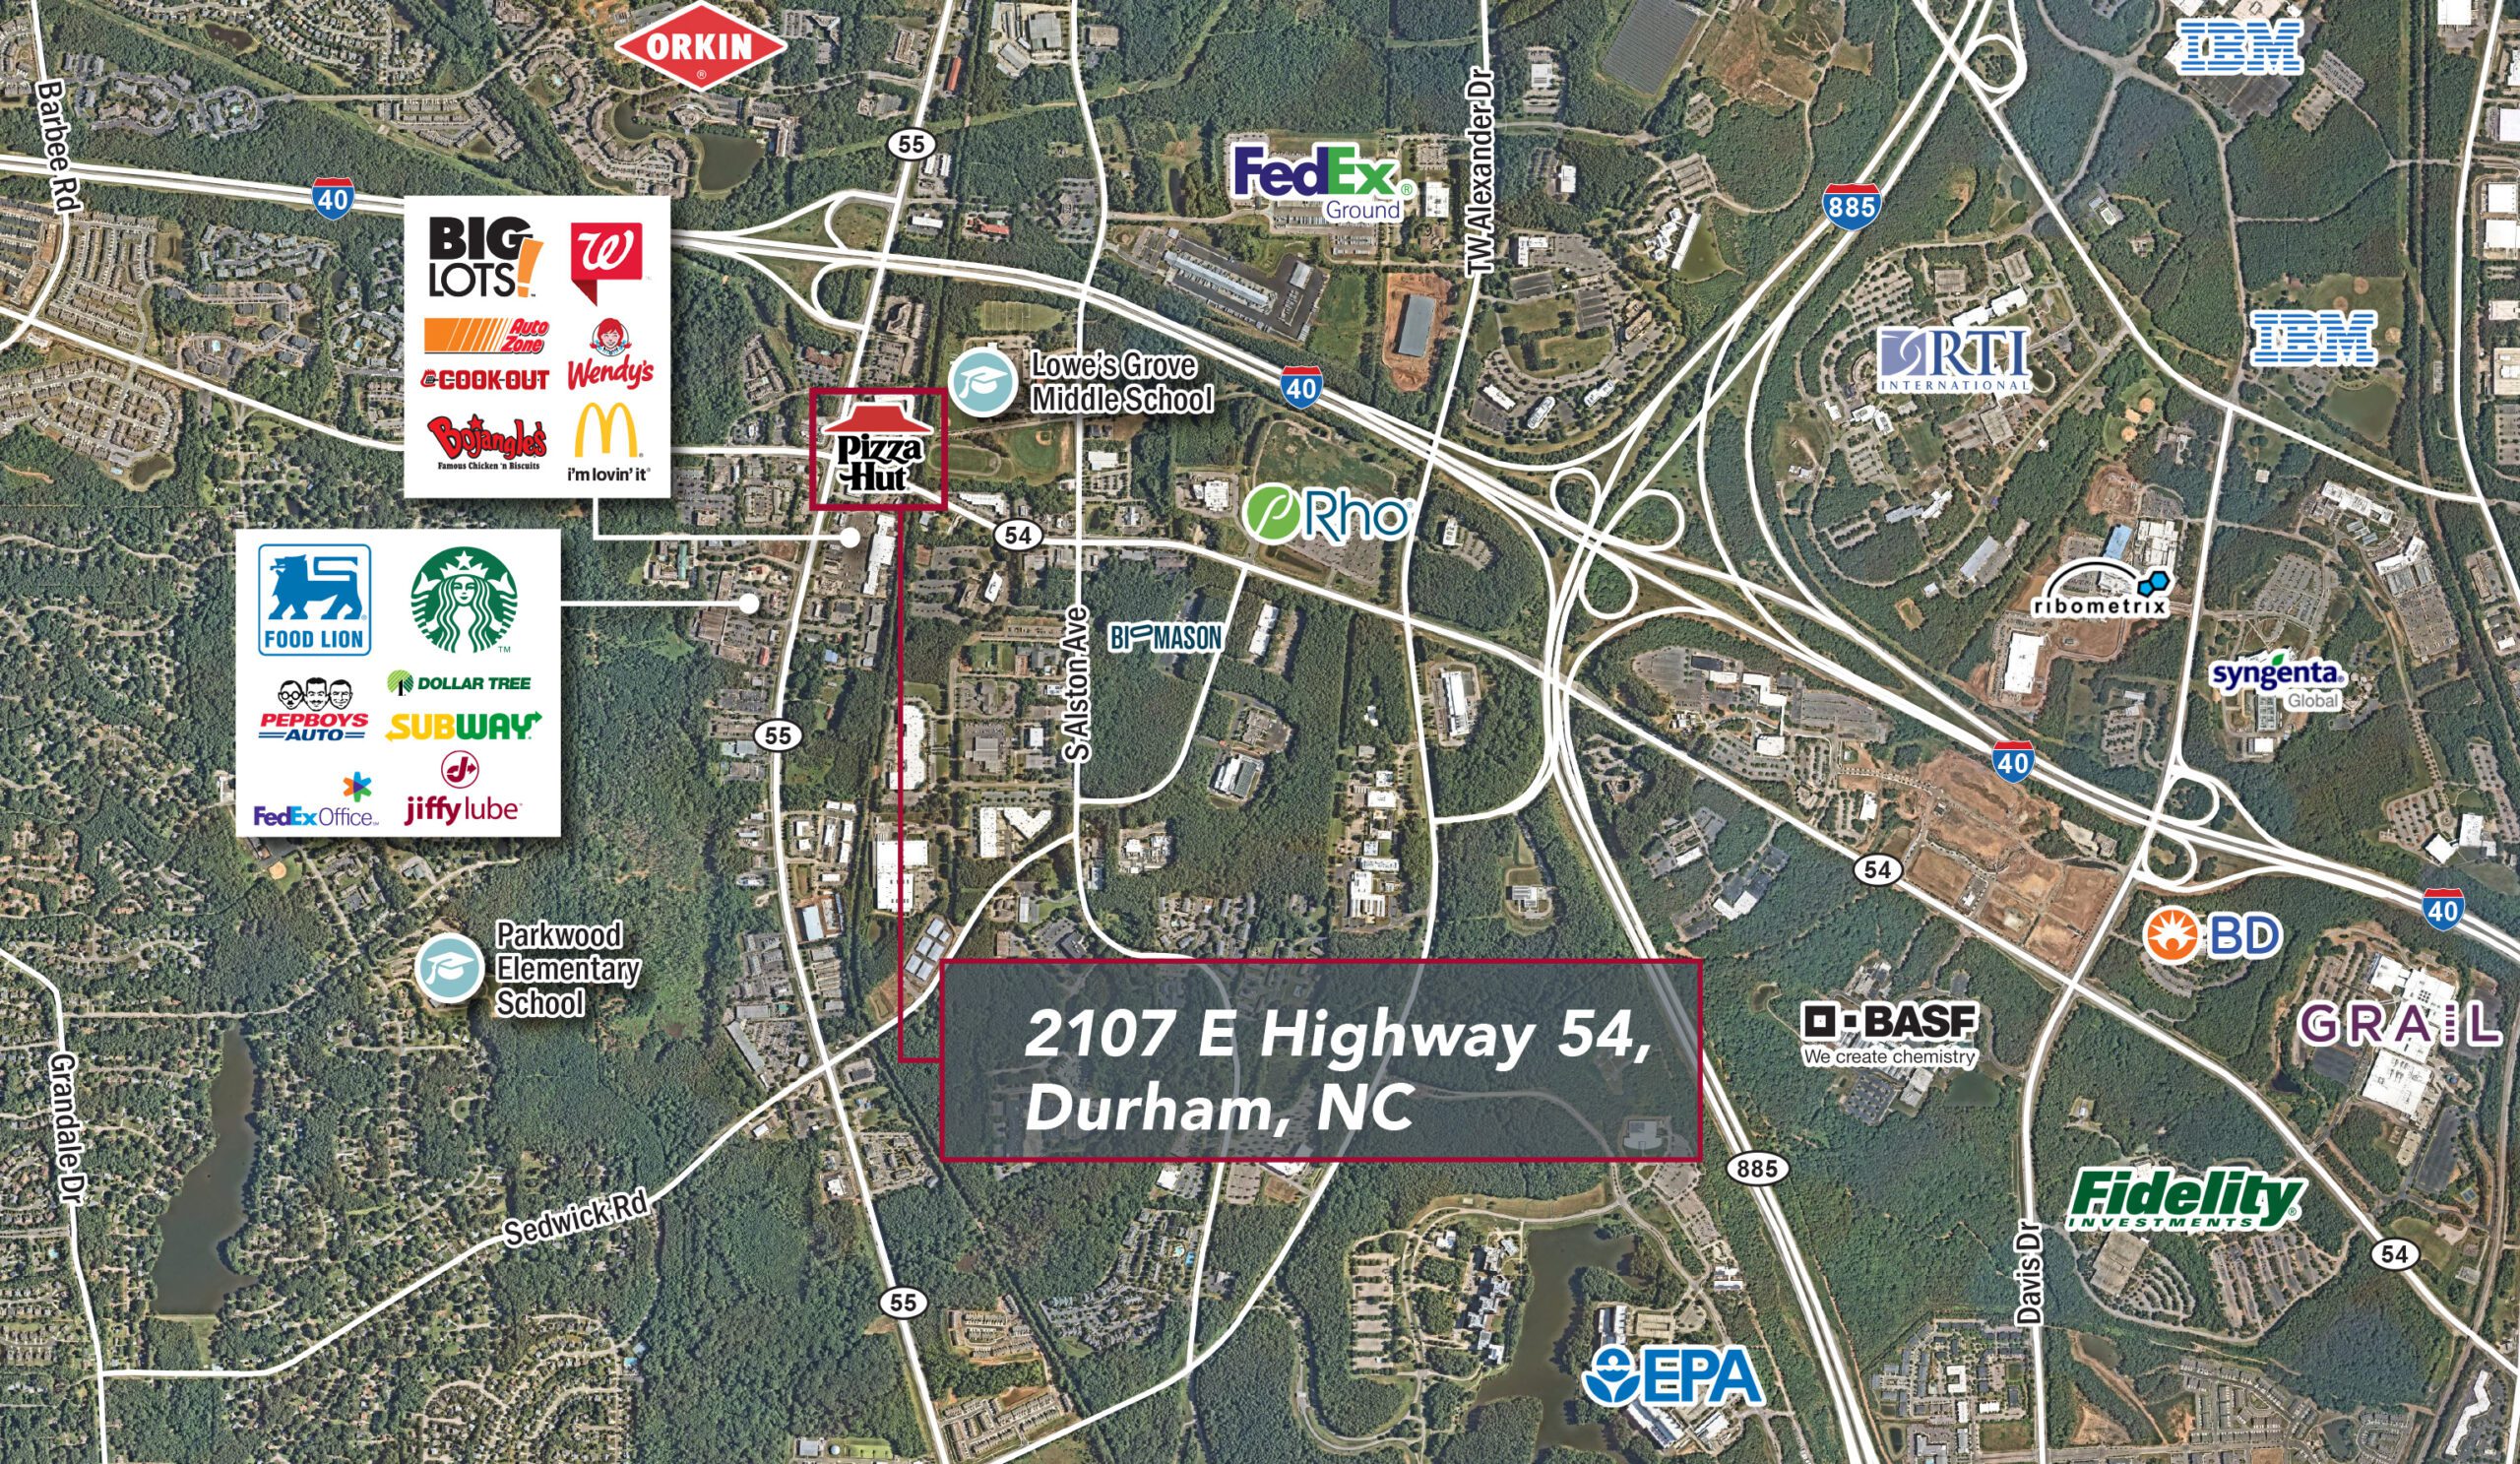 Durham Pizza Hut Aerial Map